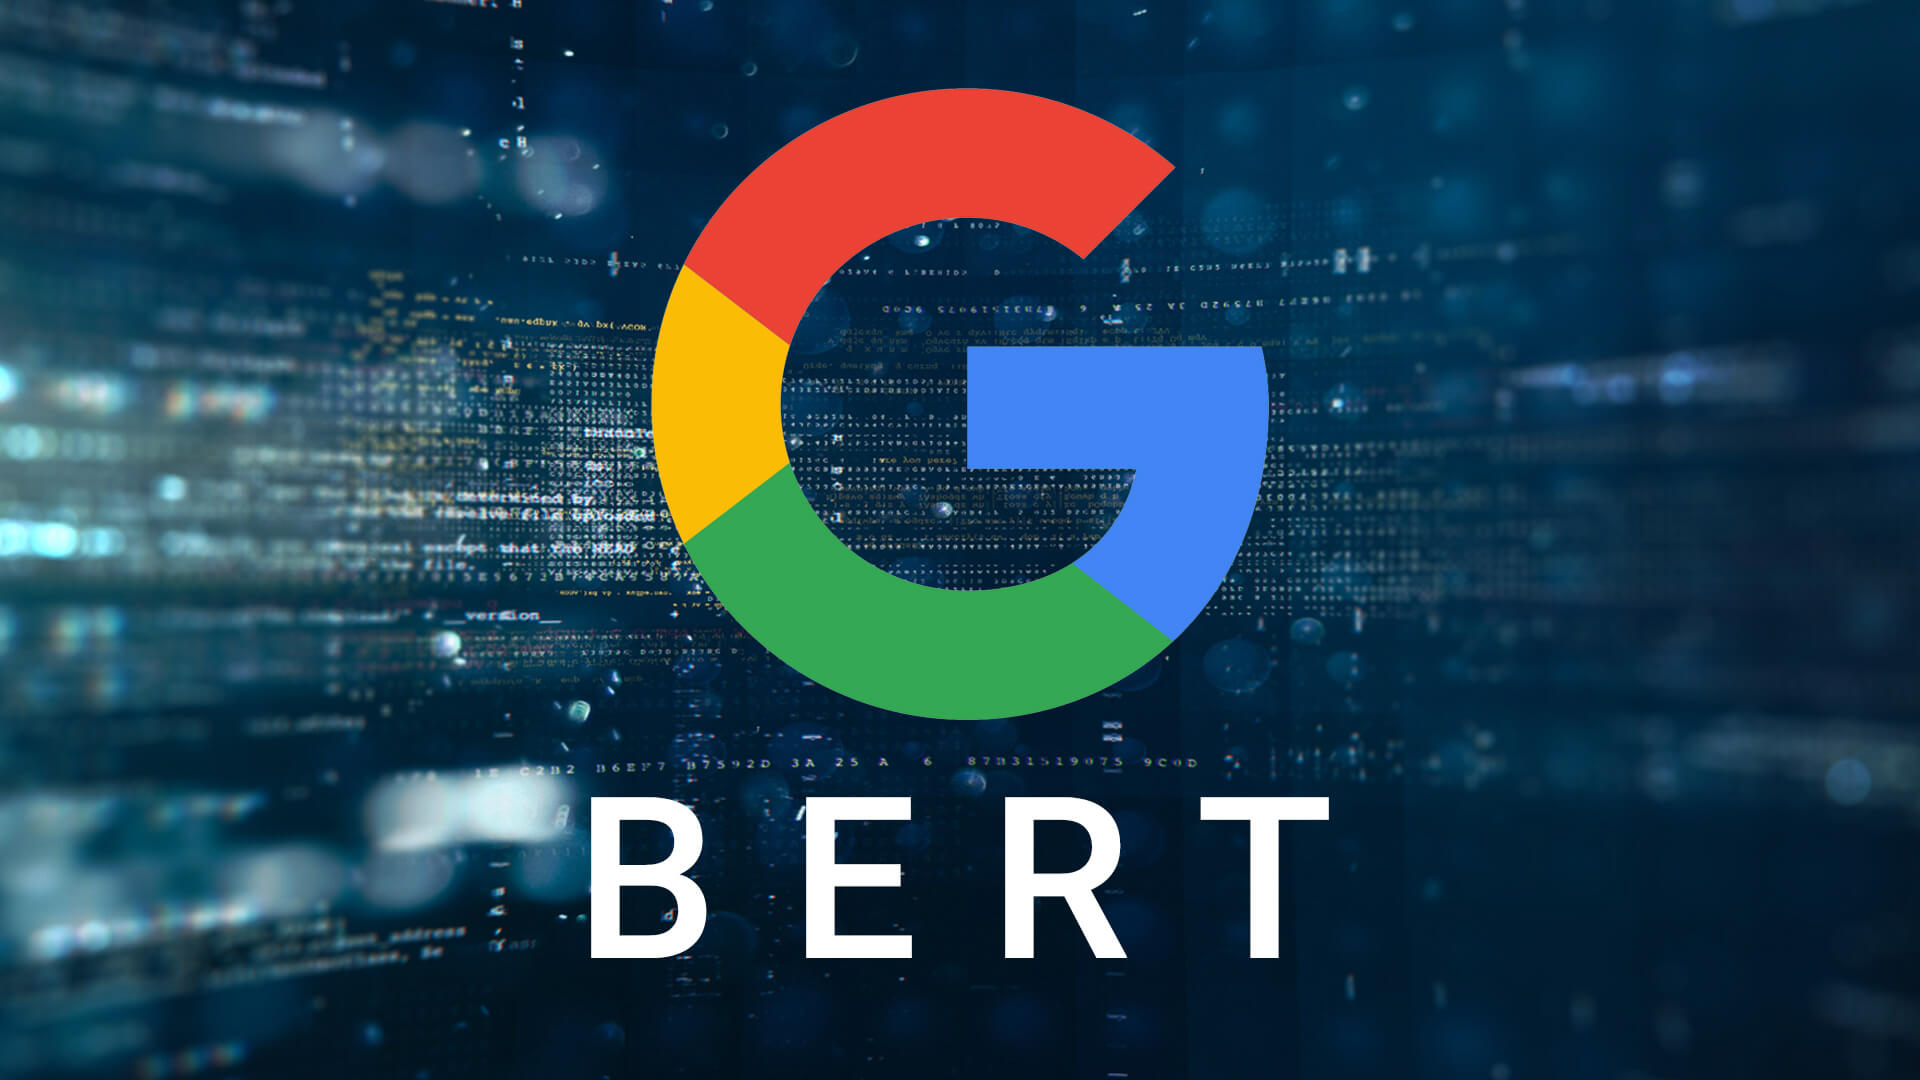 Google rolls out new search algorithm, Bert